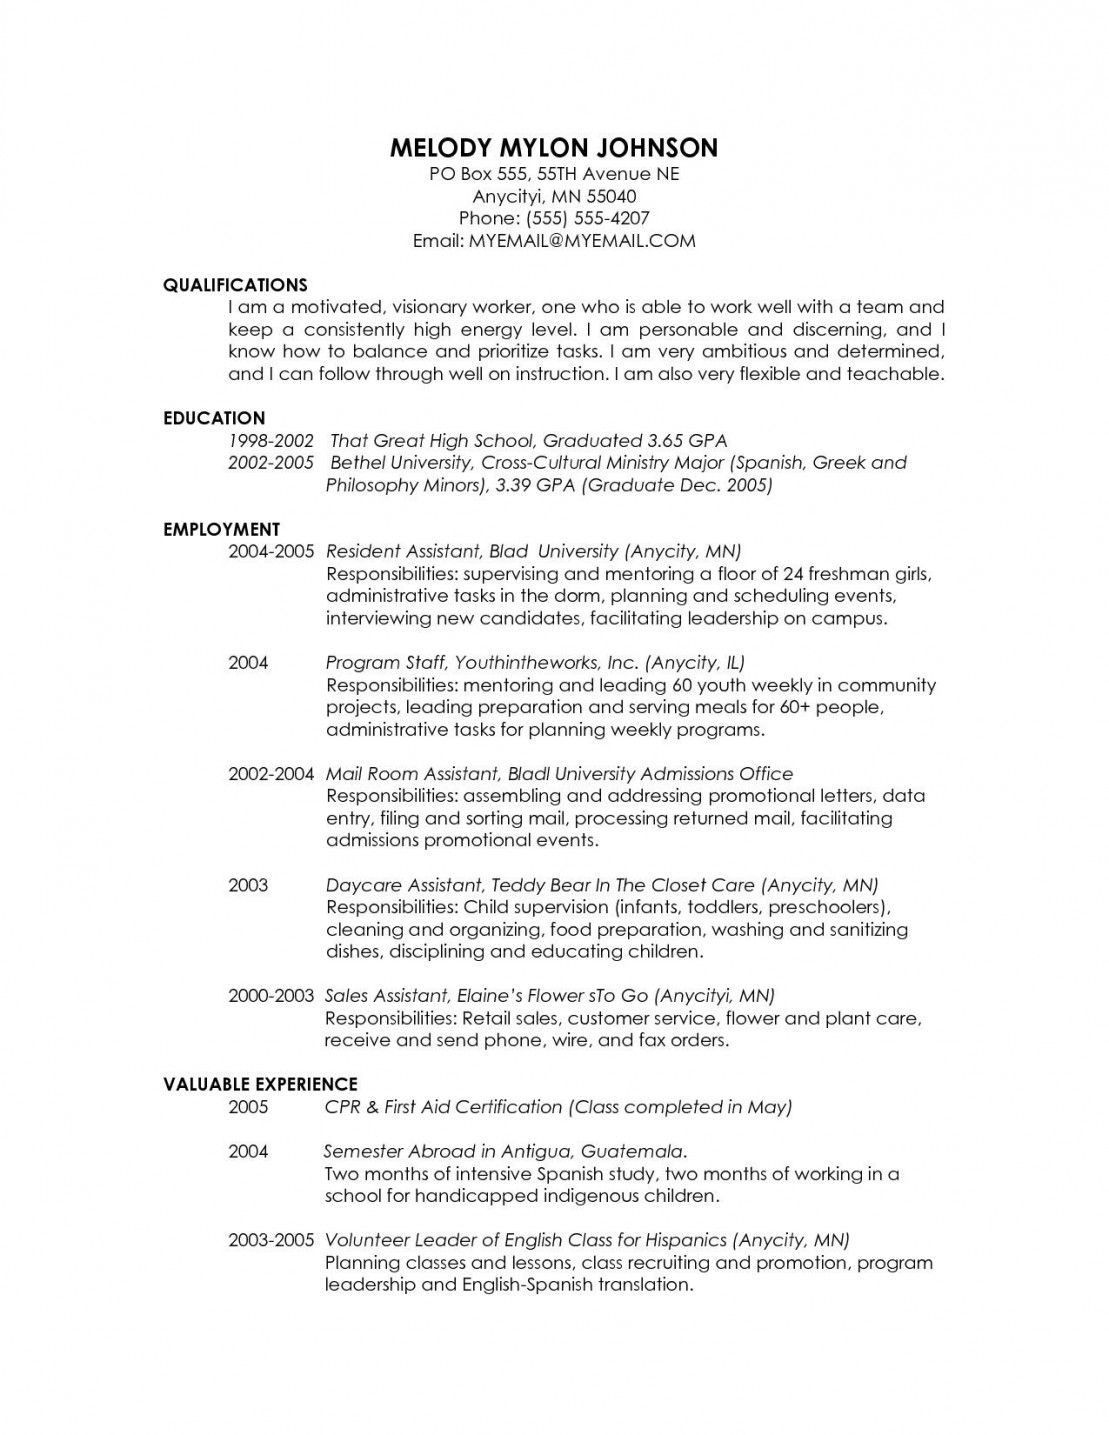 Resume For Graduate School Cv For Graduate School Template Agadi Ifreezer Co Curriculum Vitae Template Graduate School resume for graduate school|wikiresume.com